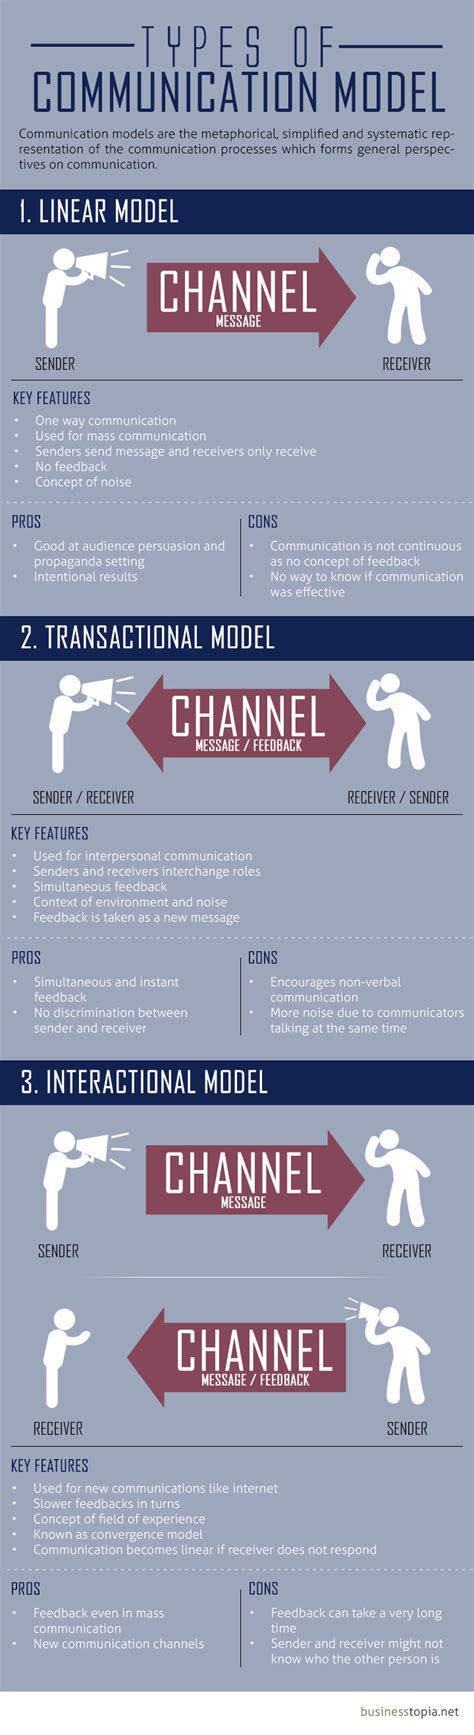 Linear Model Of Communication Meddennterrell